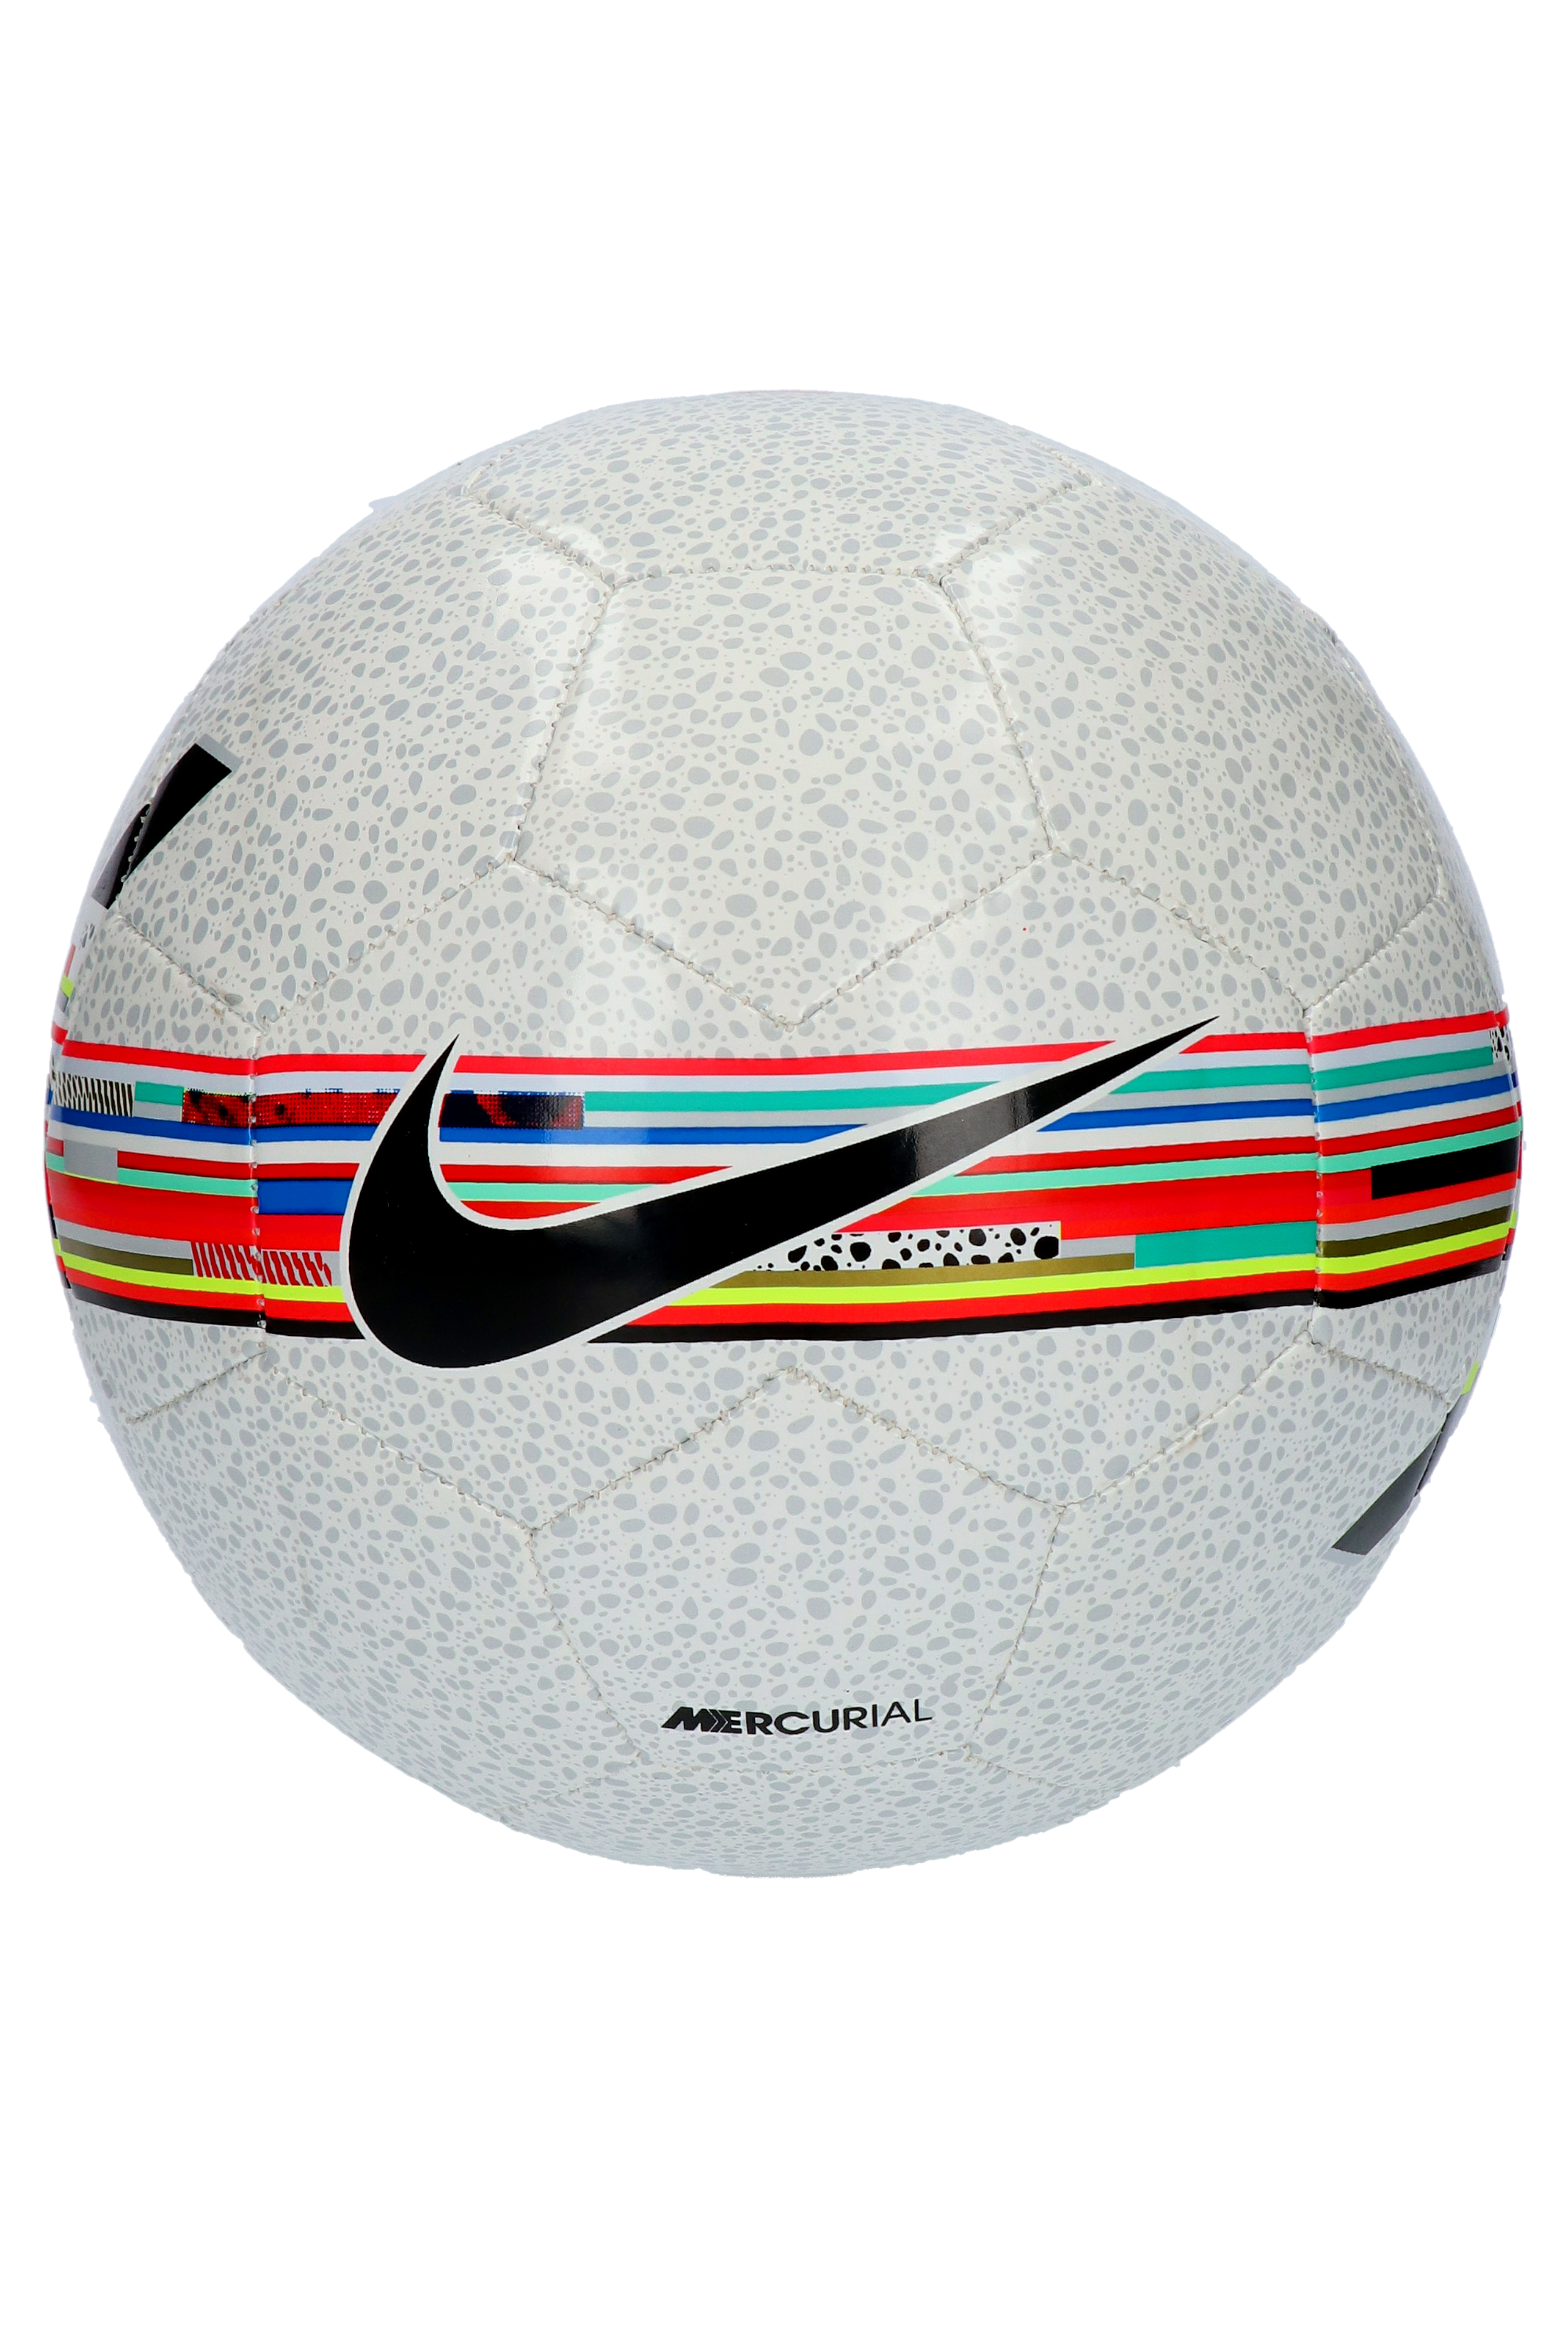 Ball Nike Mercurial Prestige size 5 | R 